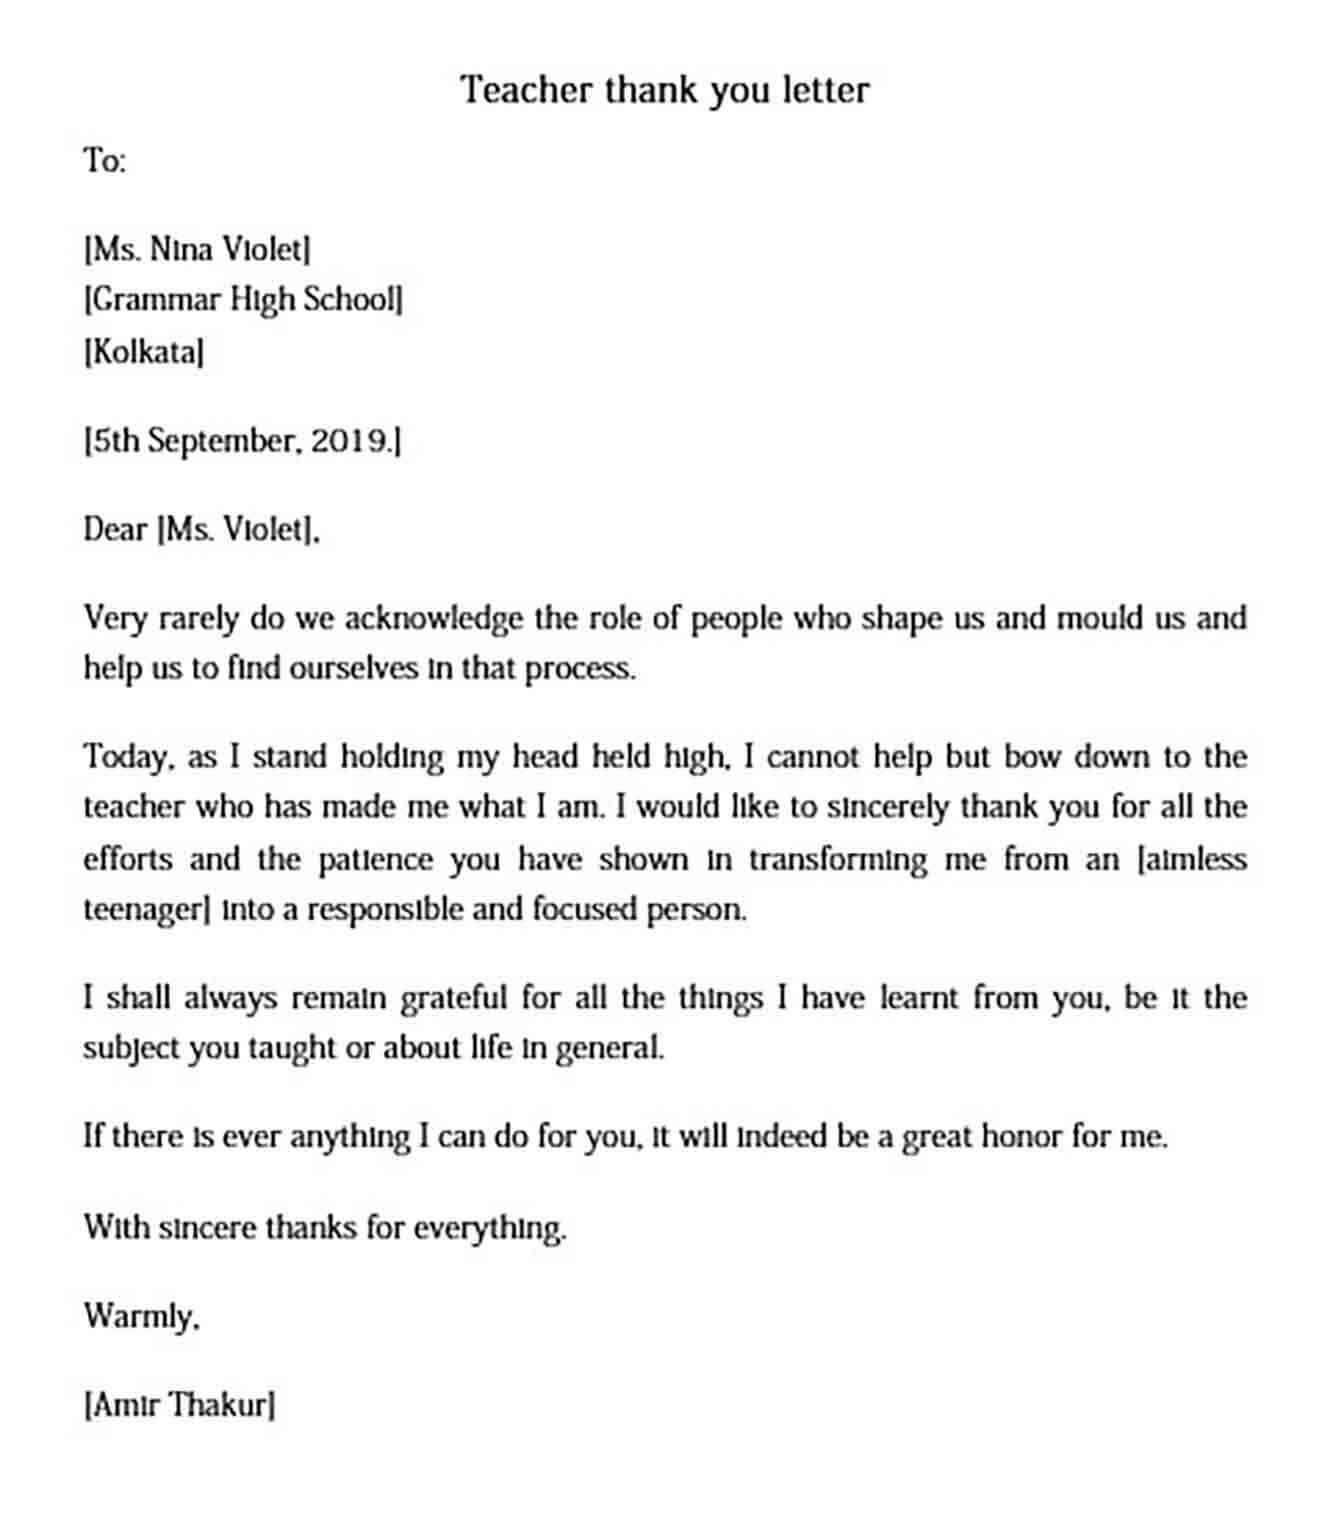 Teacher thank you letter